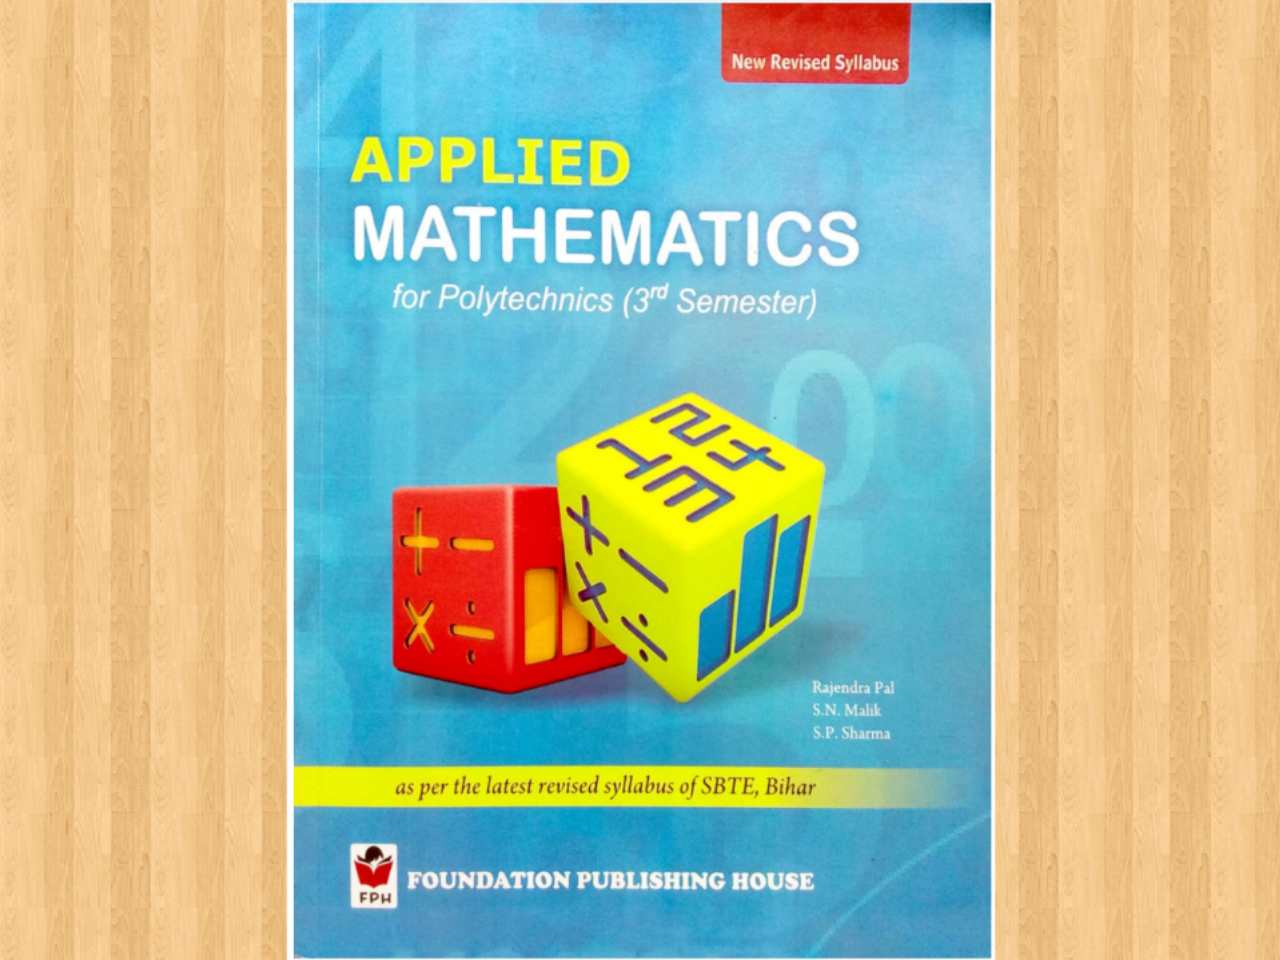 Applied Mathematics book download free